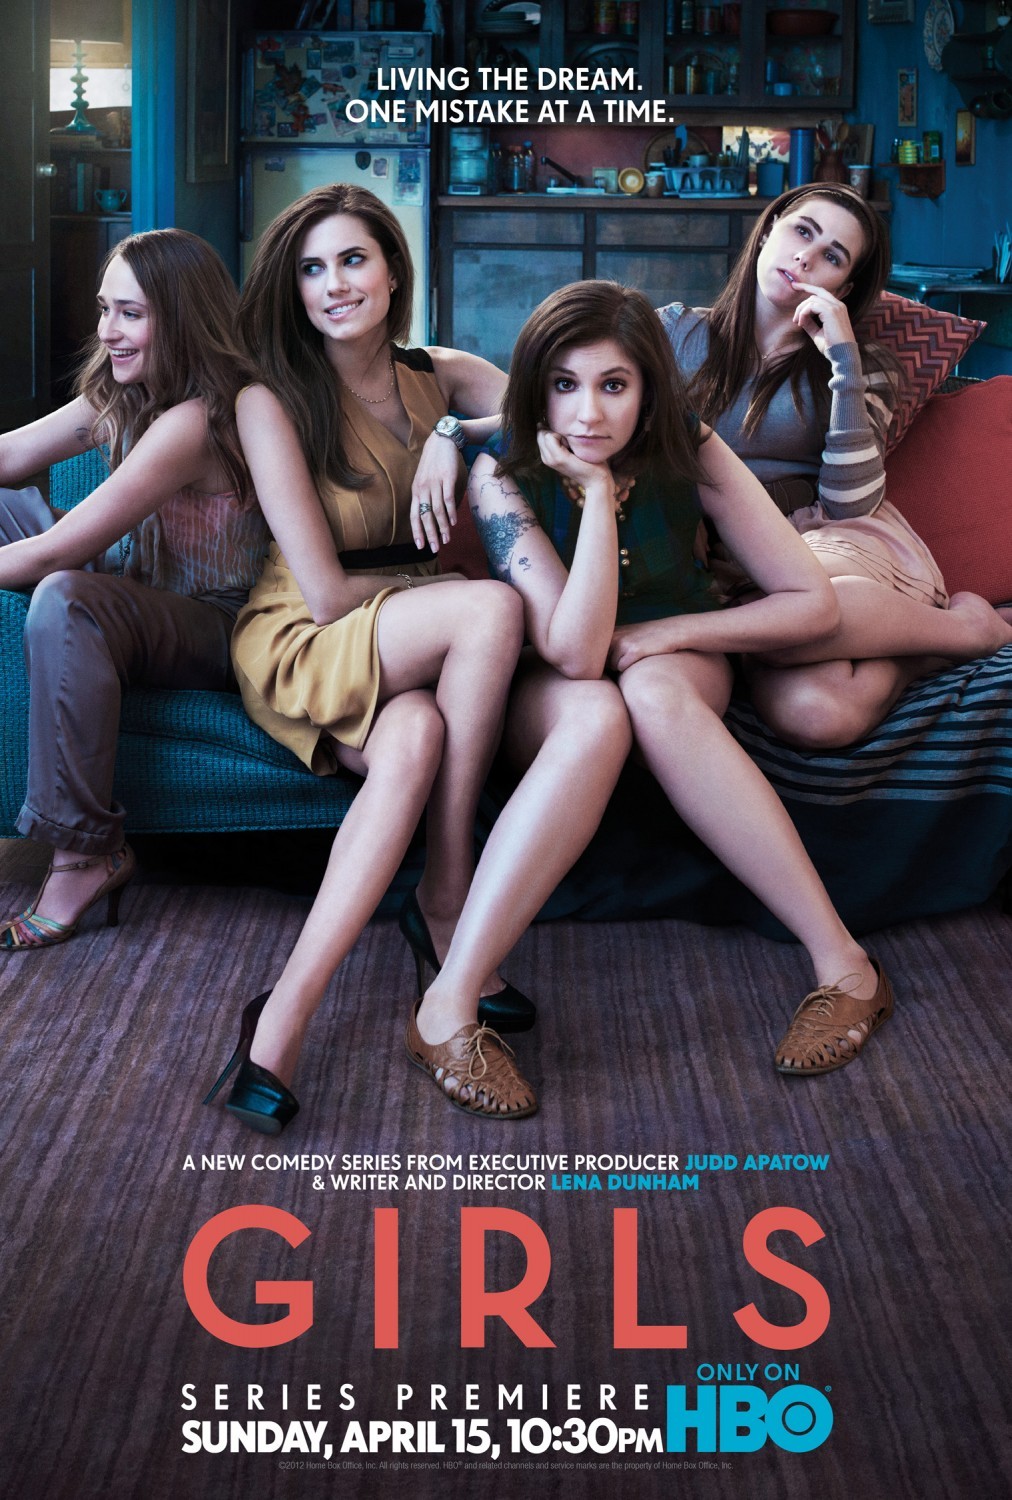 Zosia Mamet, Lena Dunham, Jemima Kirke, and Allison Williams in Girls (2012)